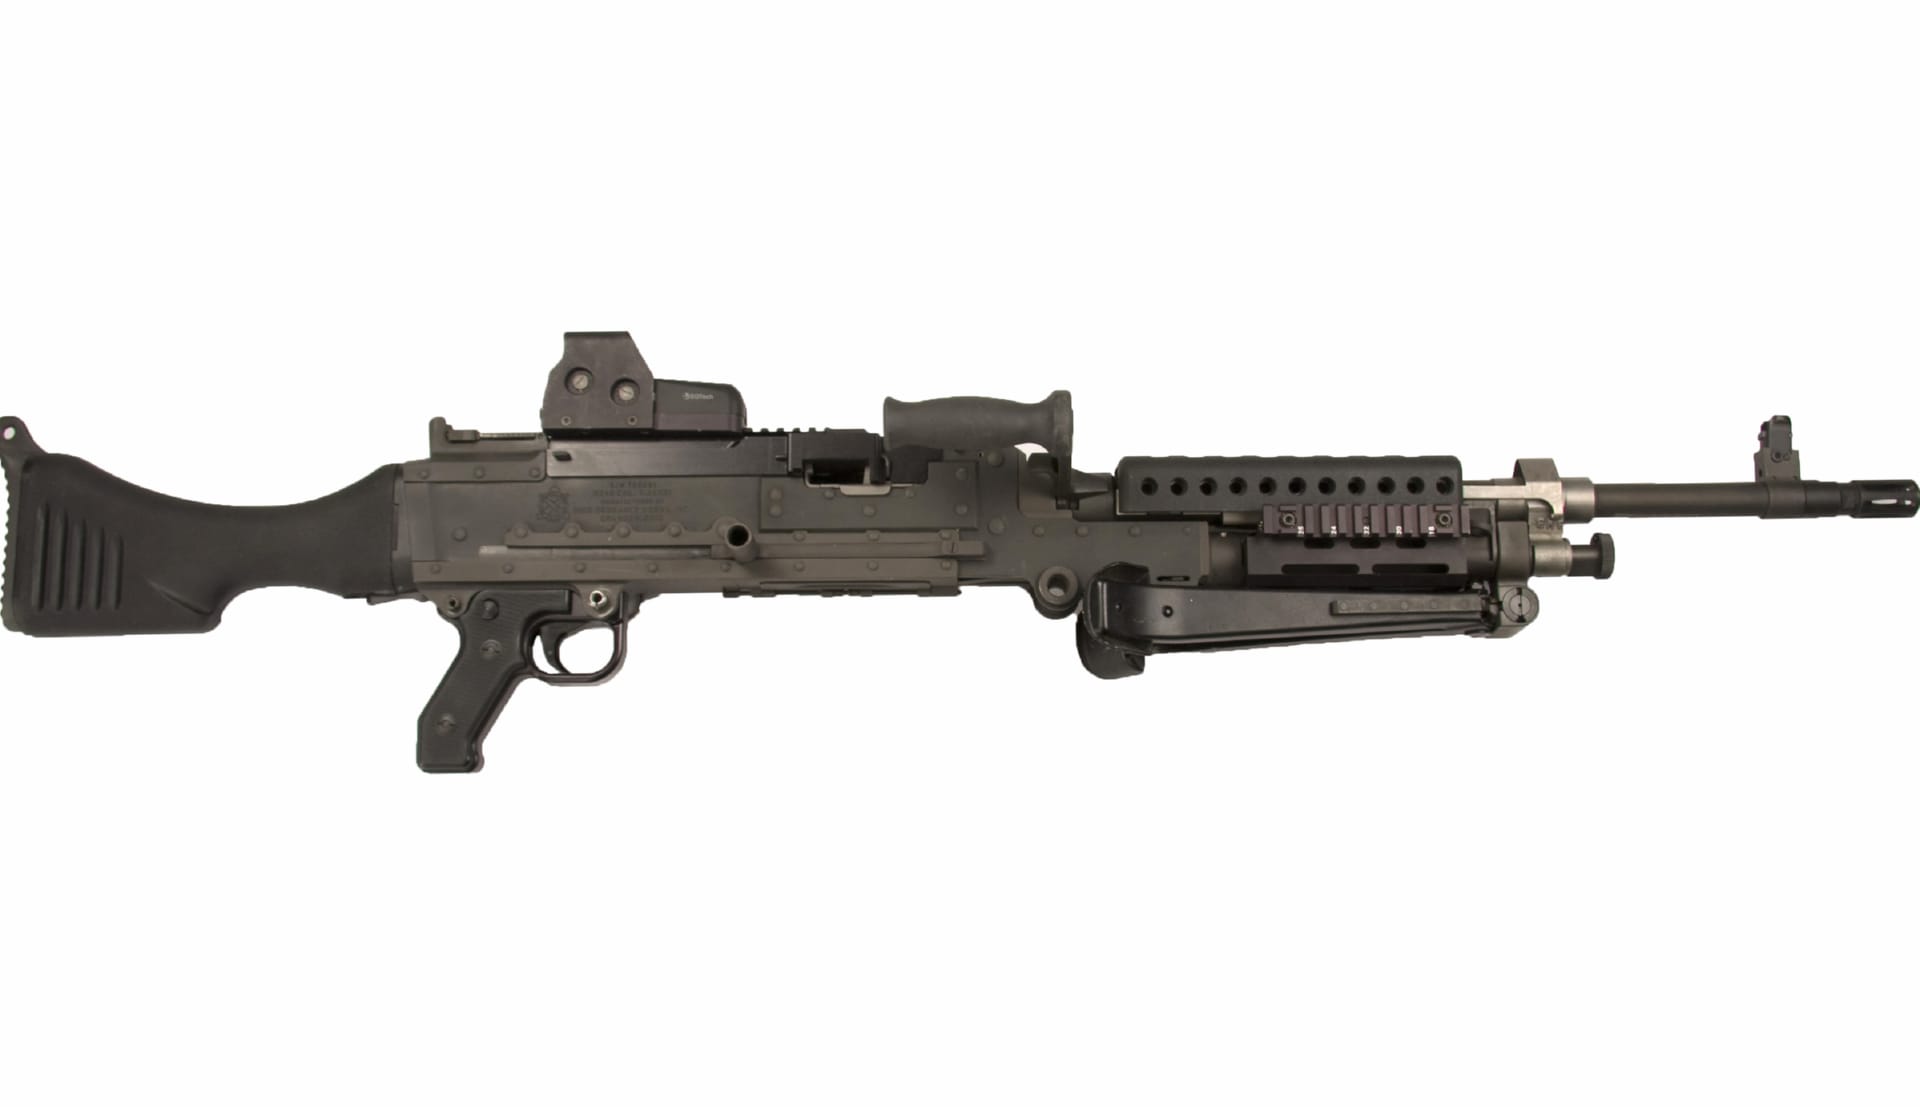 M240 machine gun at 1152 x 864 size wallpapers HD quality